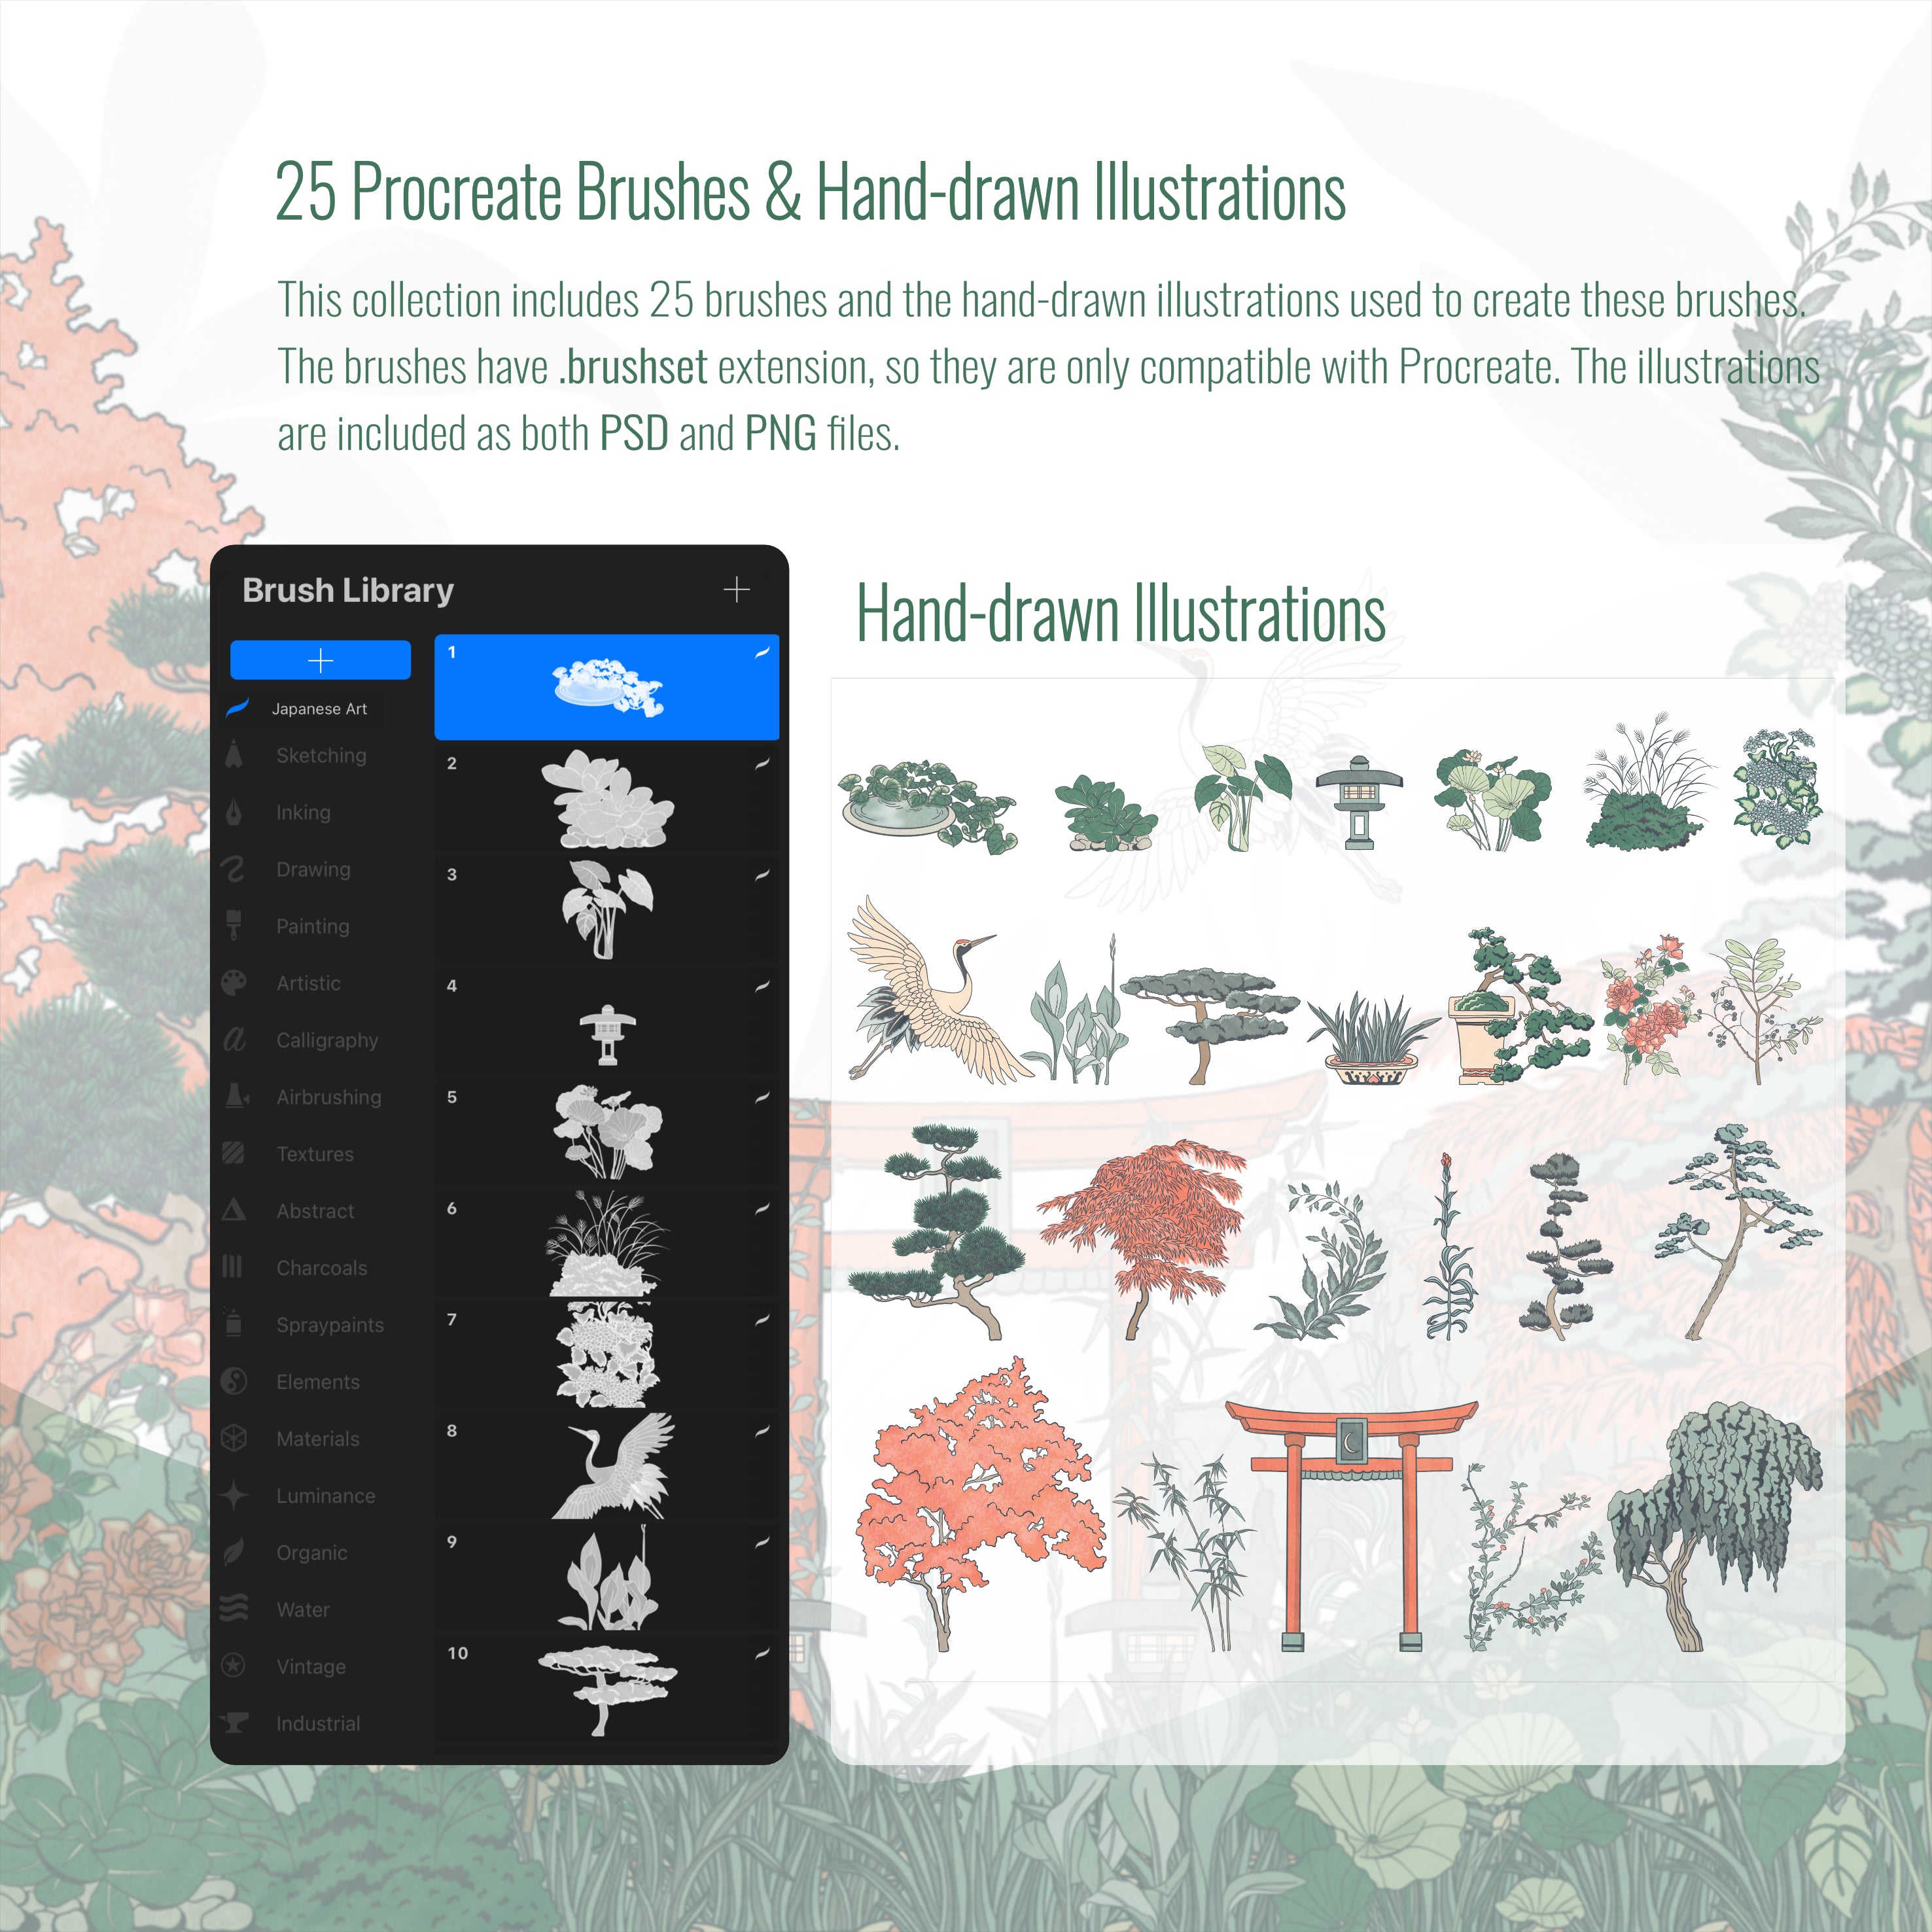 Procreate Japanese Art Vegetation Brushset & Illustrations PNG - Toffu Co